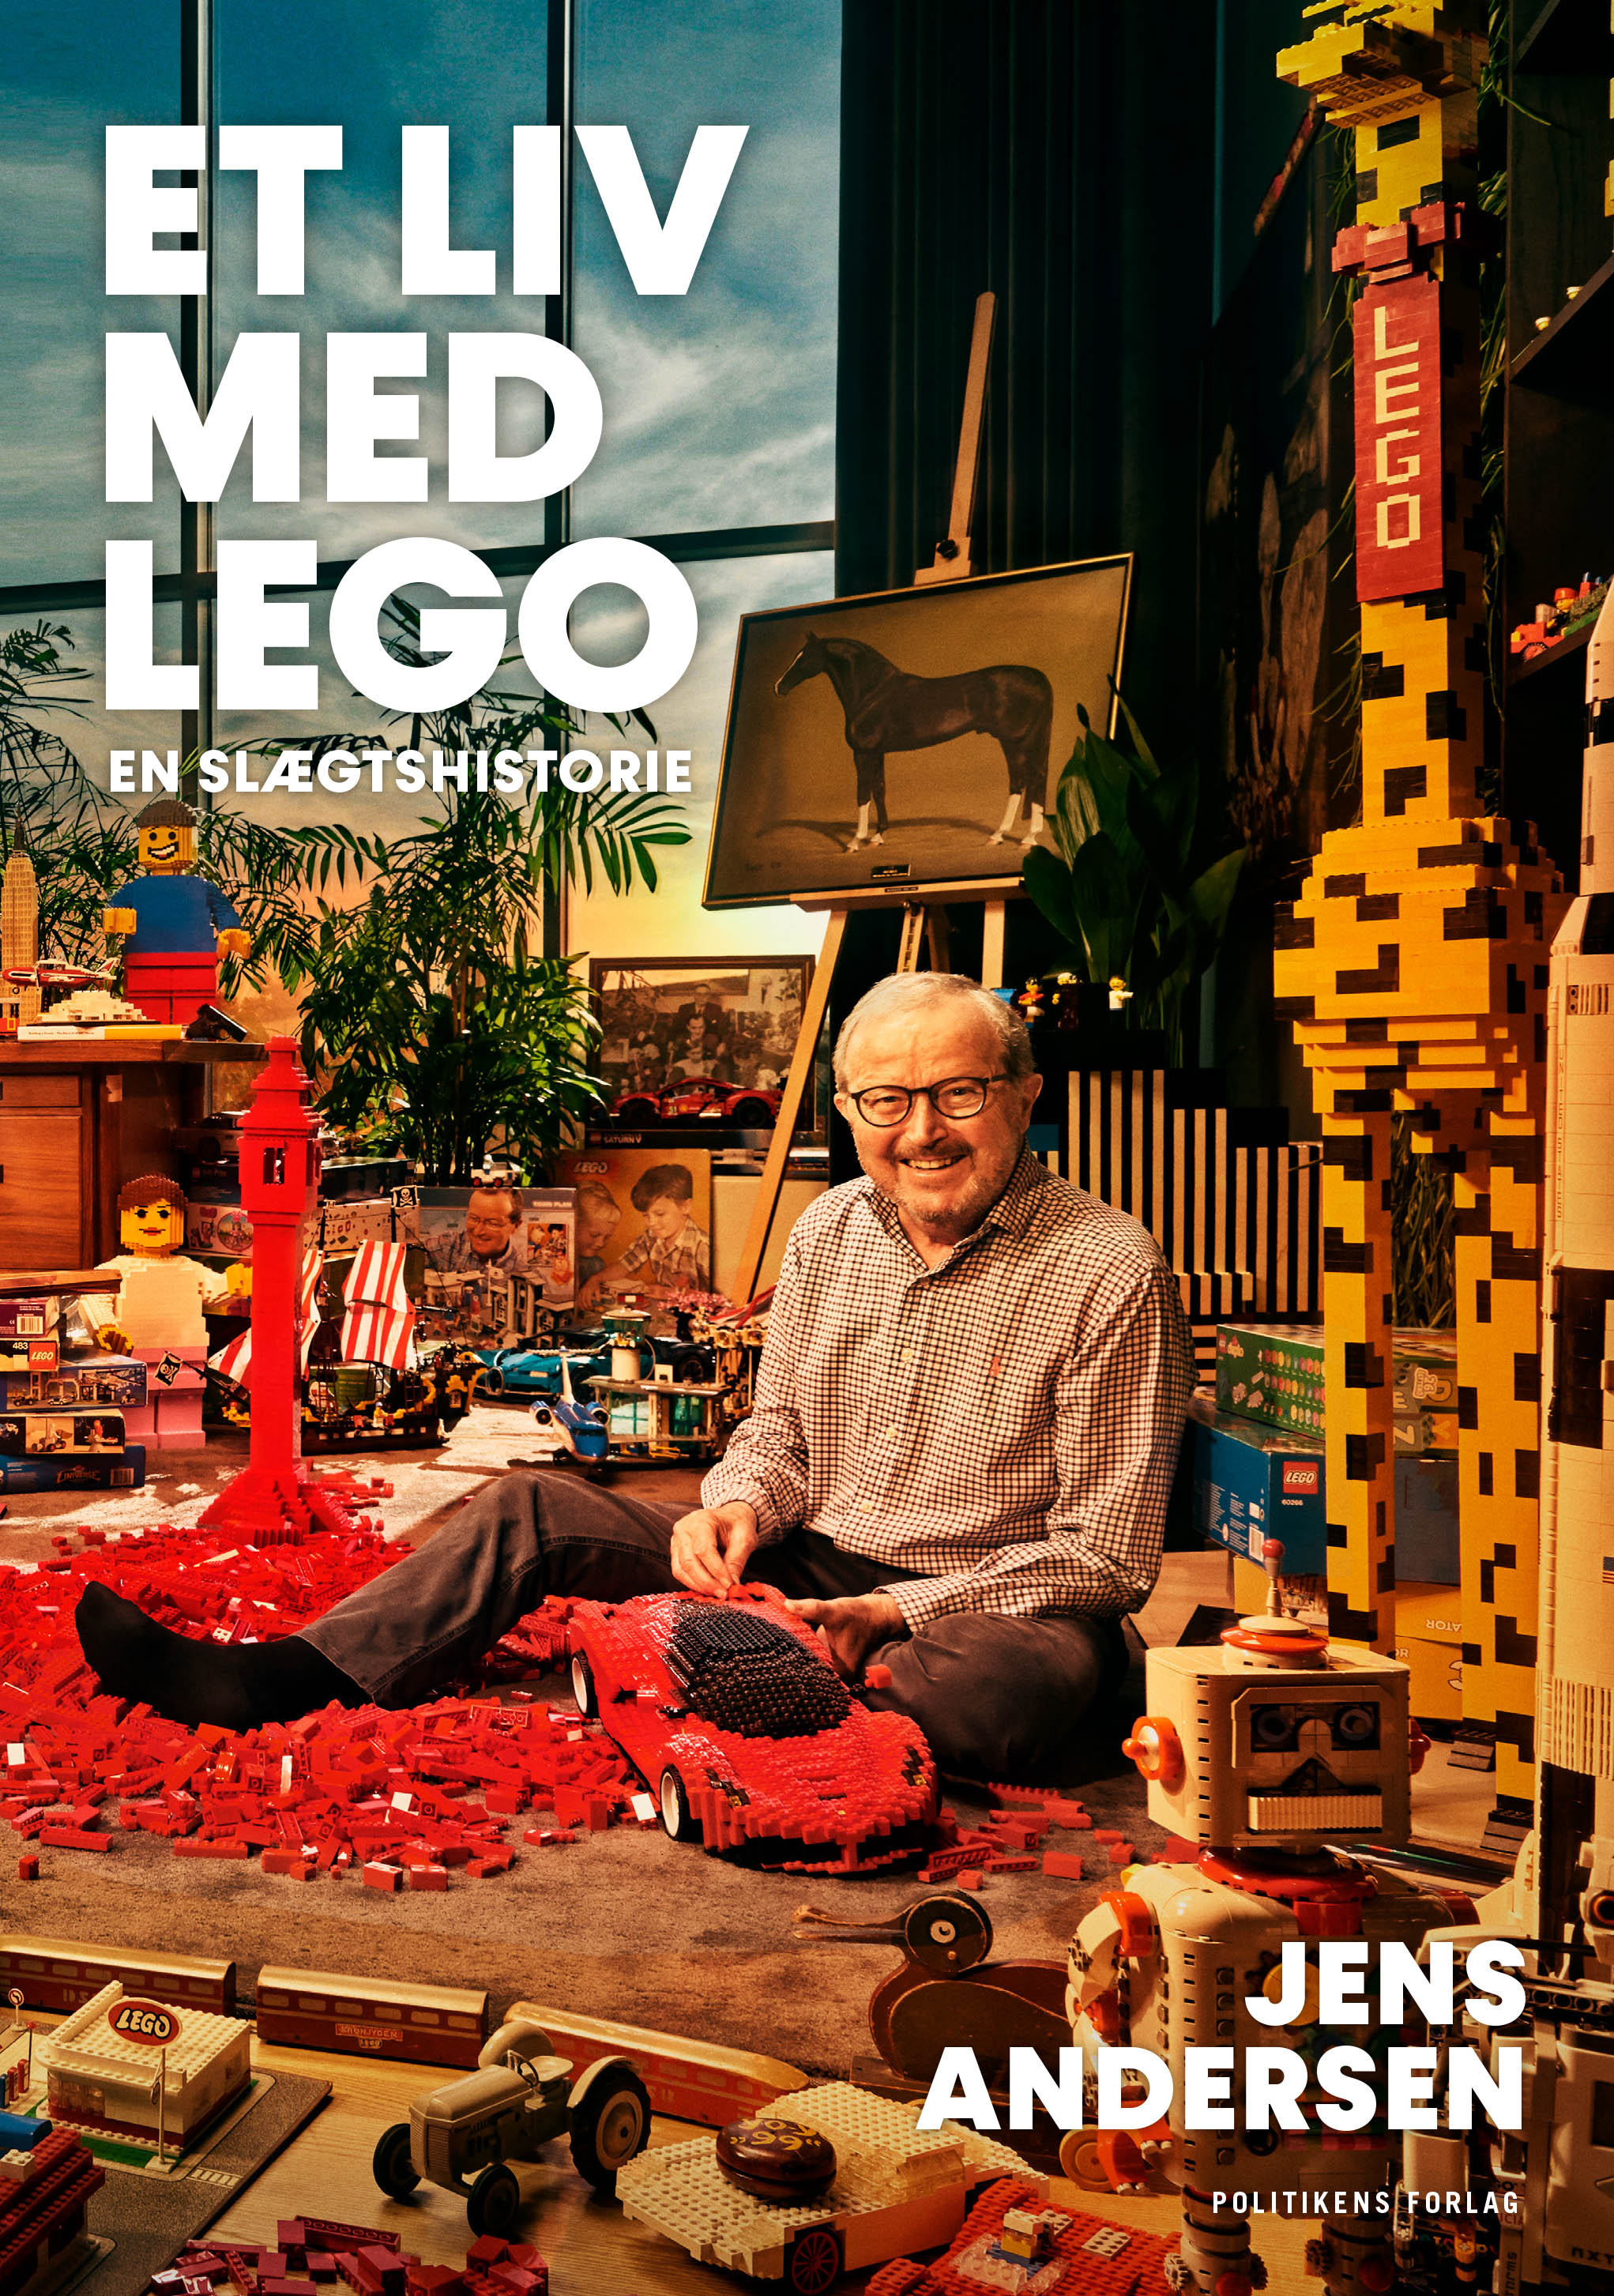 Industri-eventyr tryk: Pressesky Lego-familie træder frem i ny